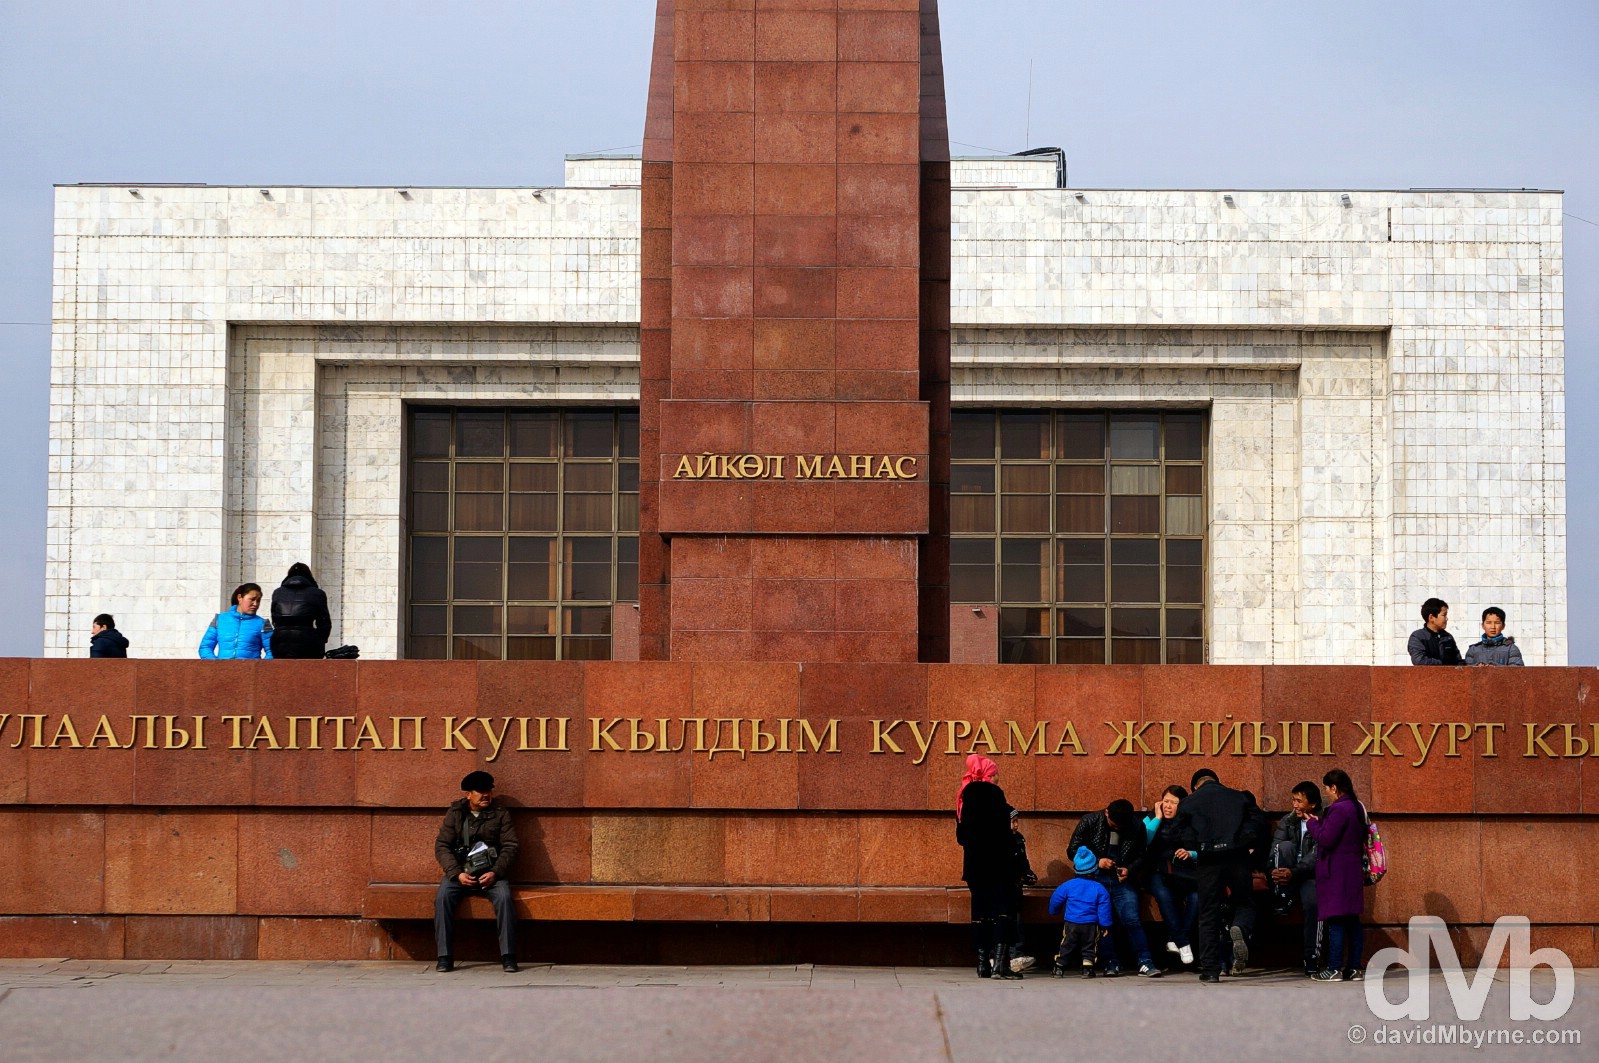 Ala-Too Square in central Bishkek, Kyrgyzstan. February 23, 2015. 